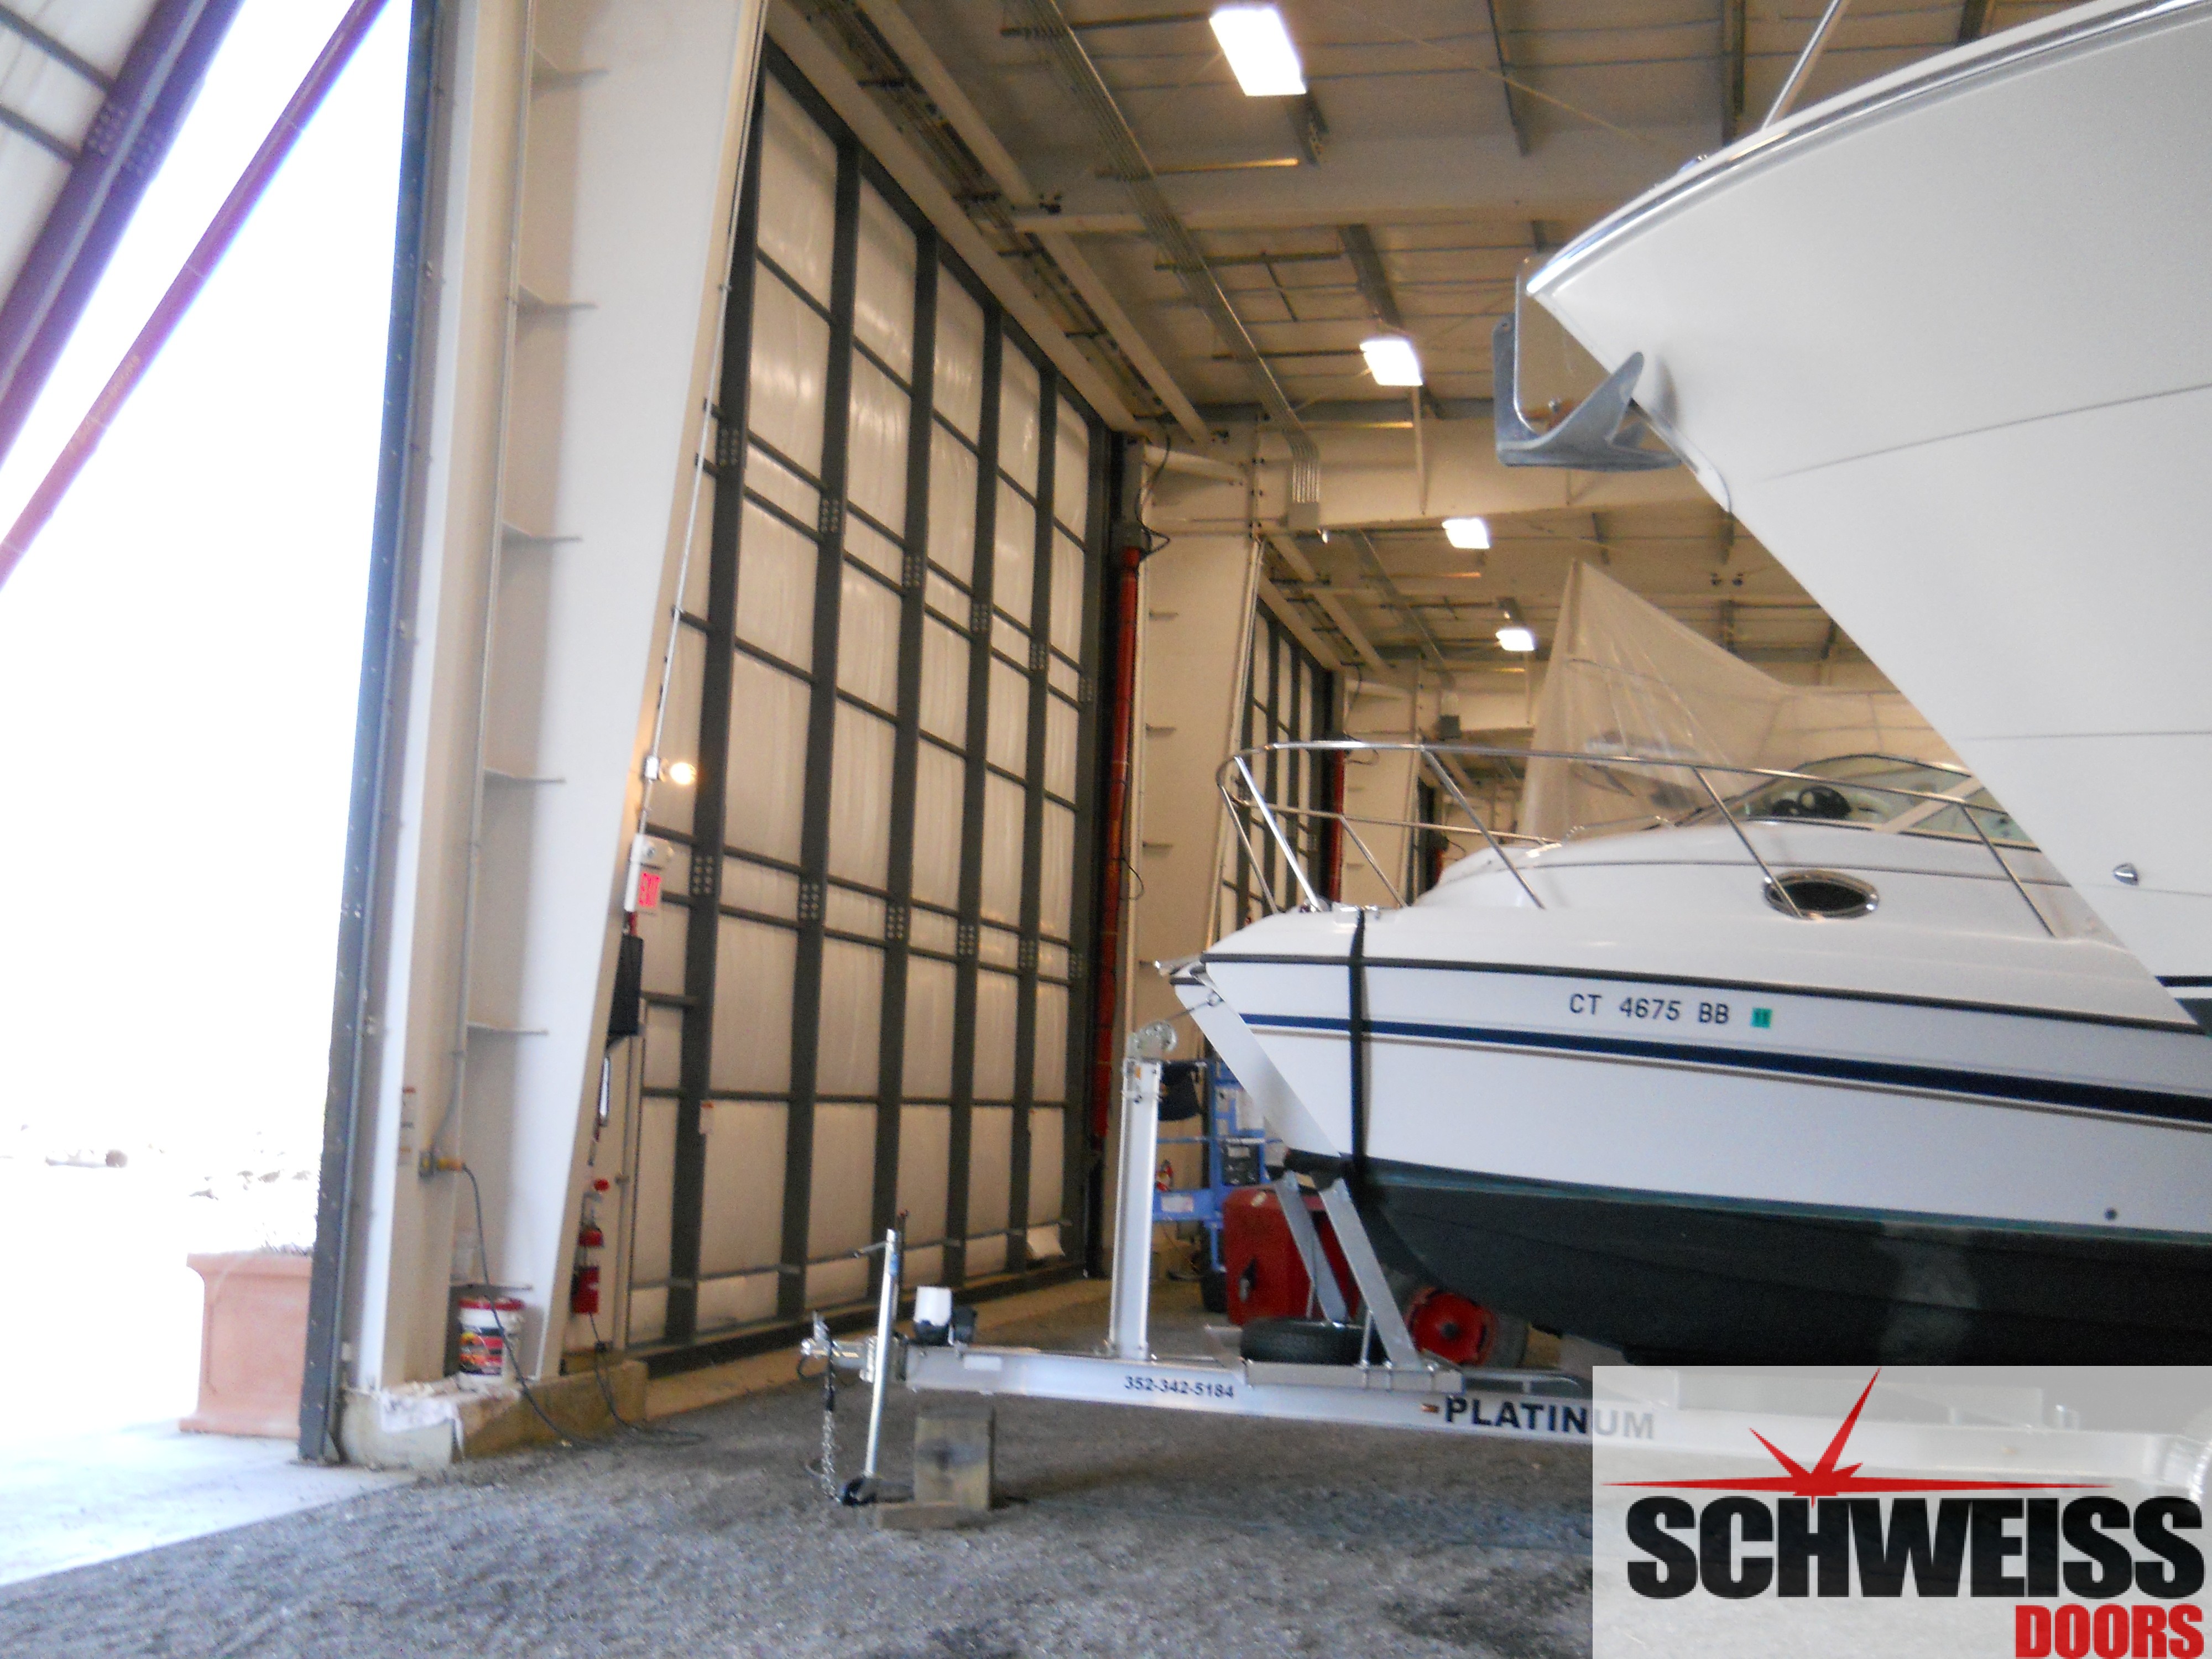 Schweiss Hydraulic Door for Boat Storage